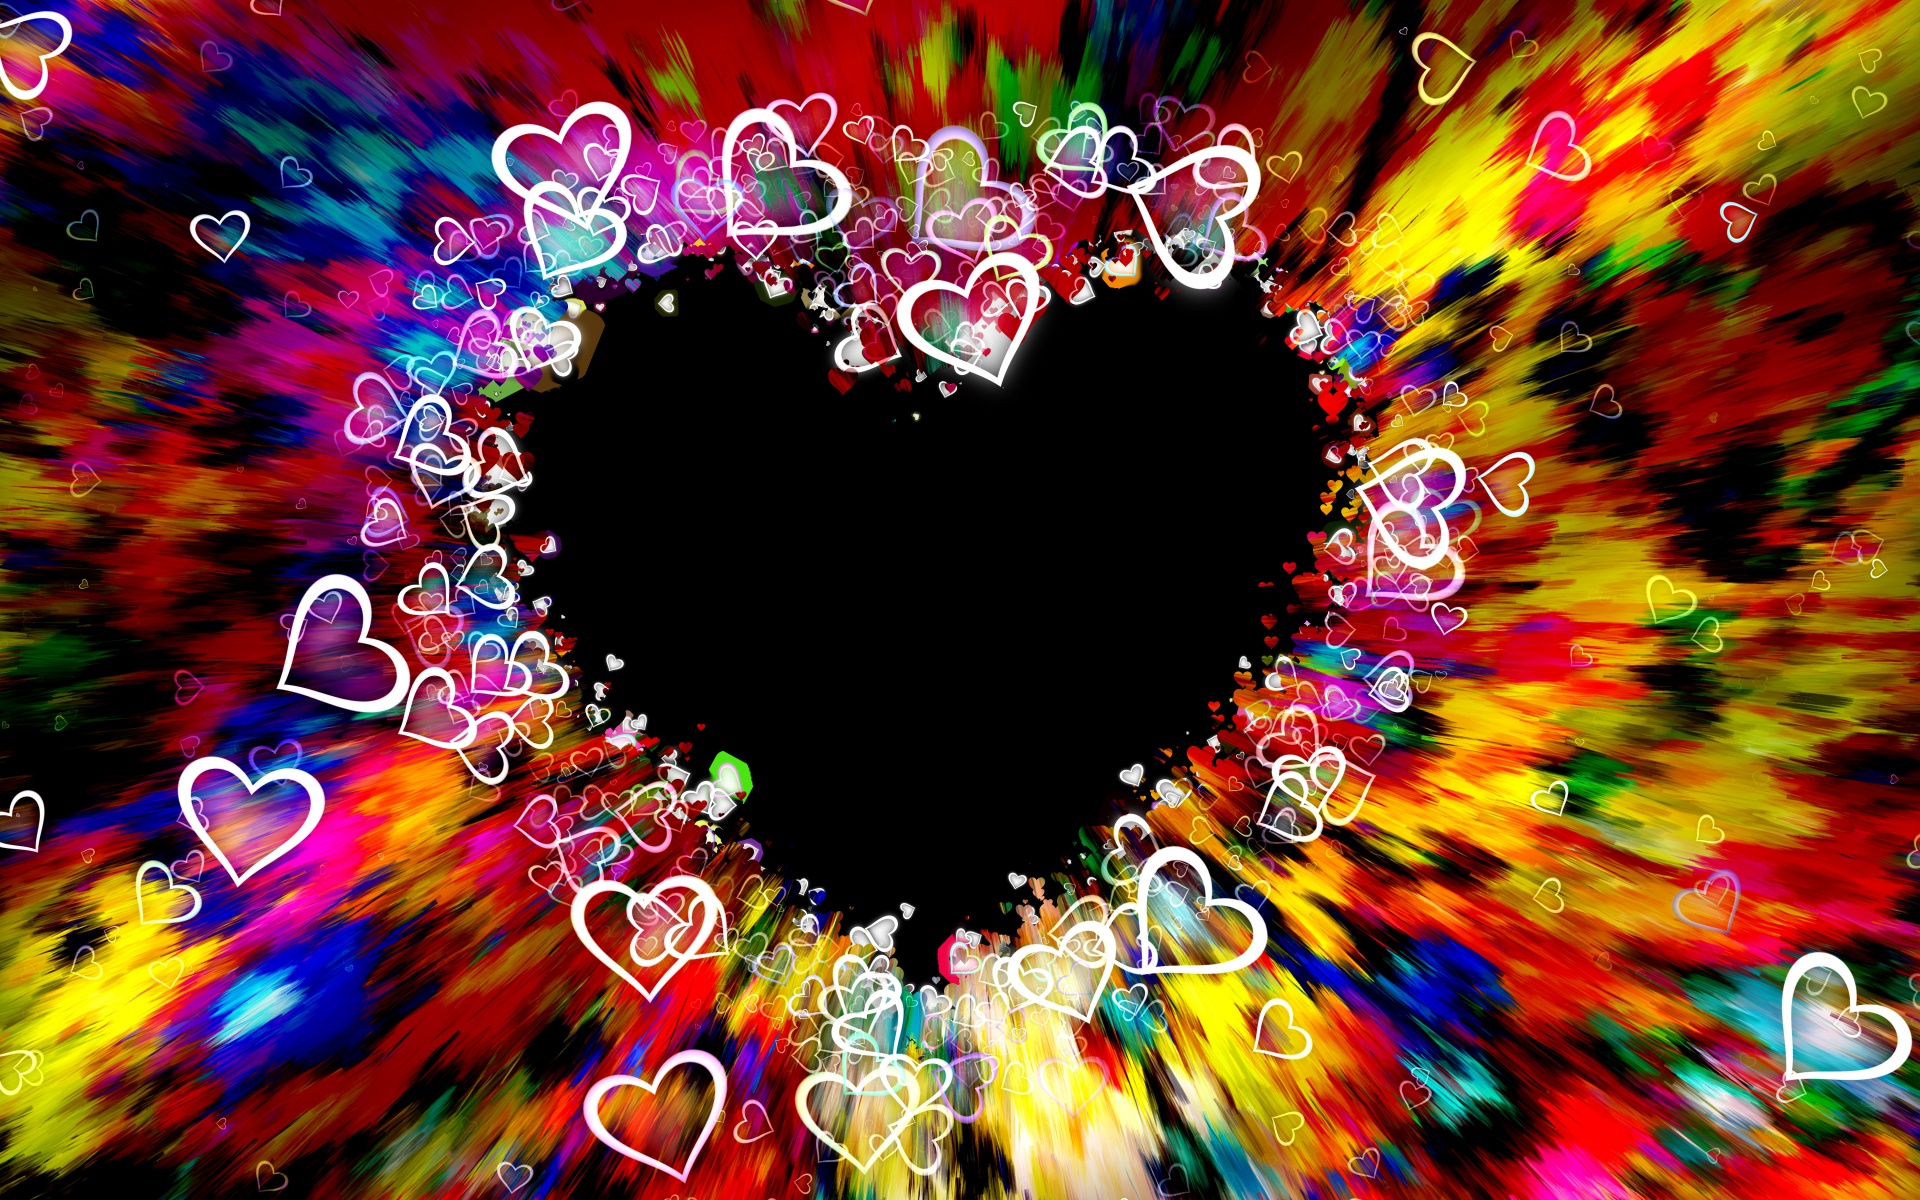 wallpaper of love heart